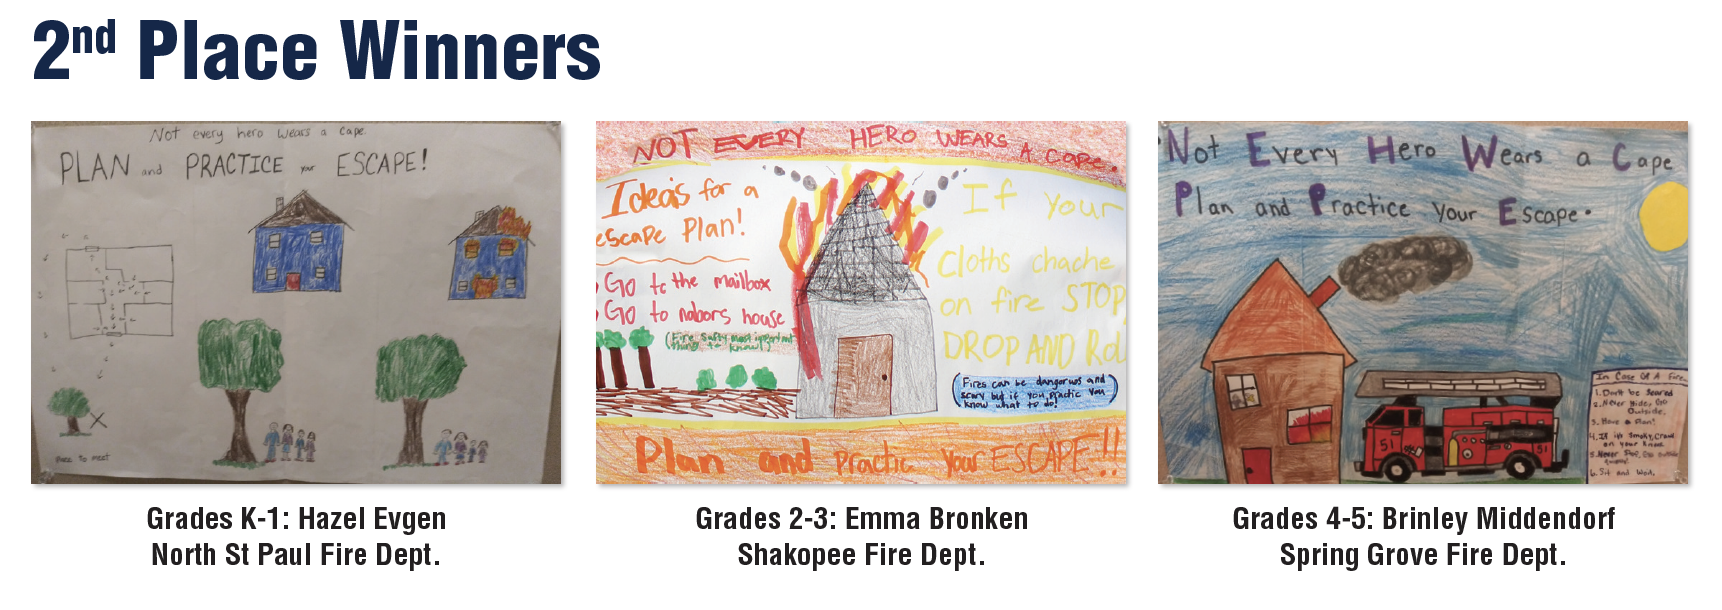 Linn Grove Student Wins Fire Safety Poster Contest - Linn-Mar Community  School District